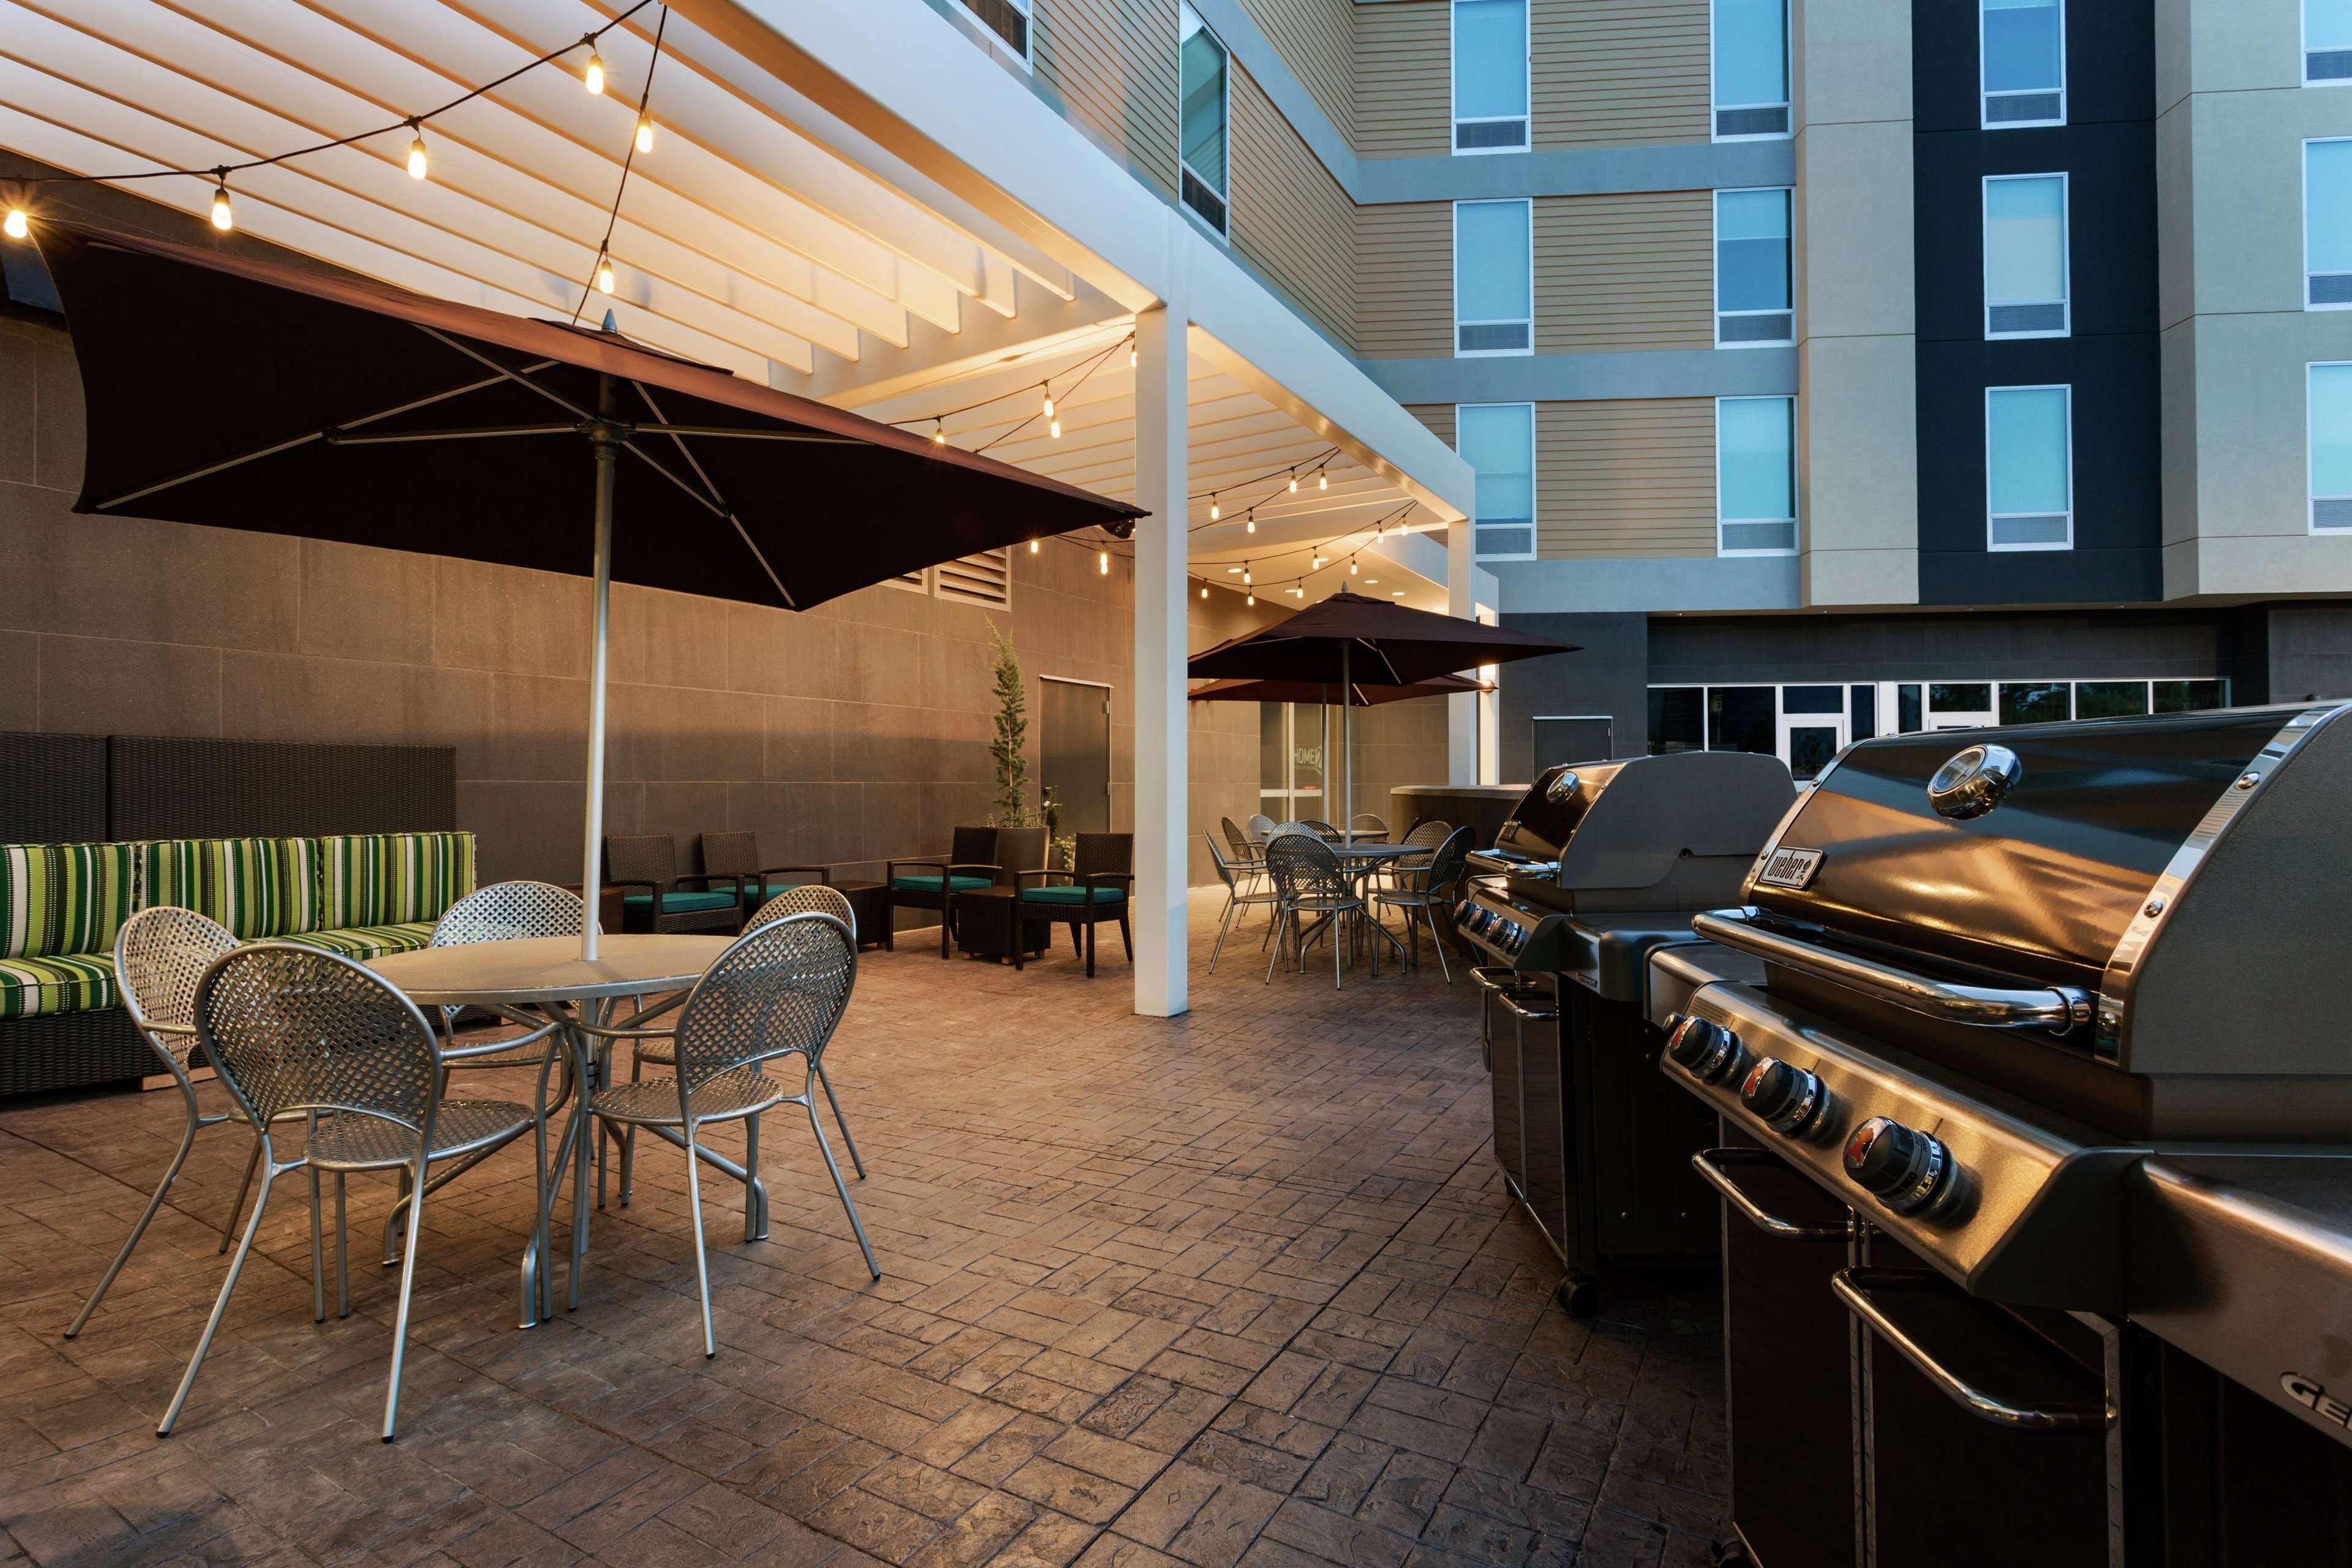 Home2 Suites by Hilton Salt Lake City-Murray, UT image